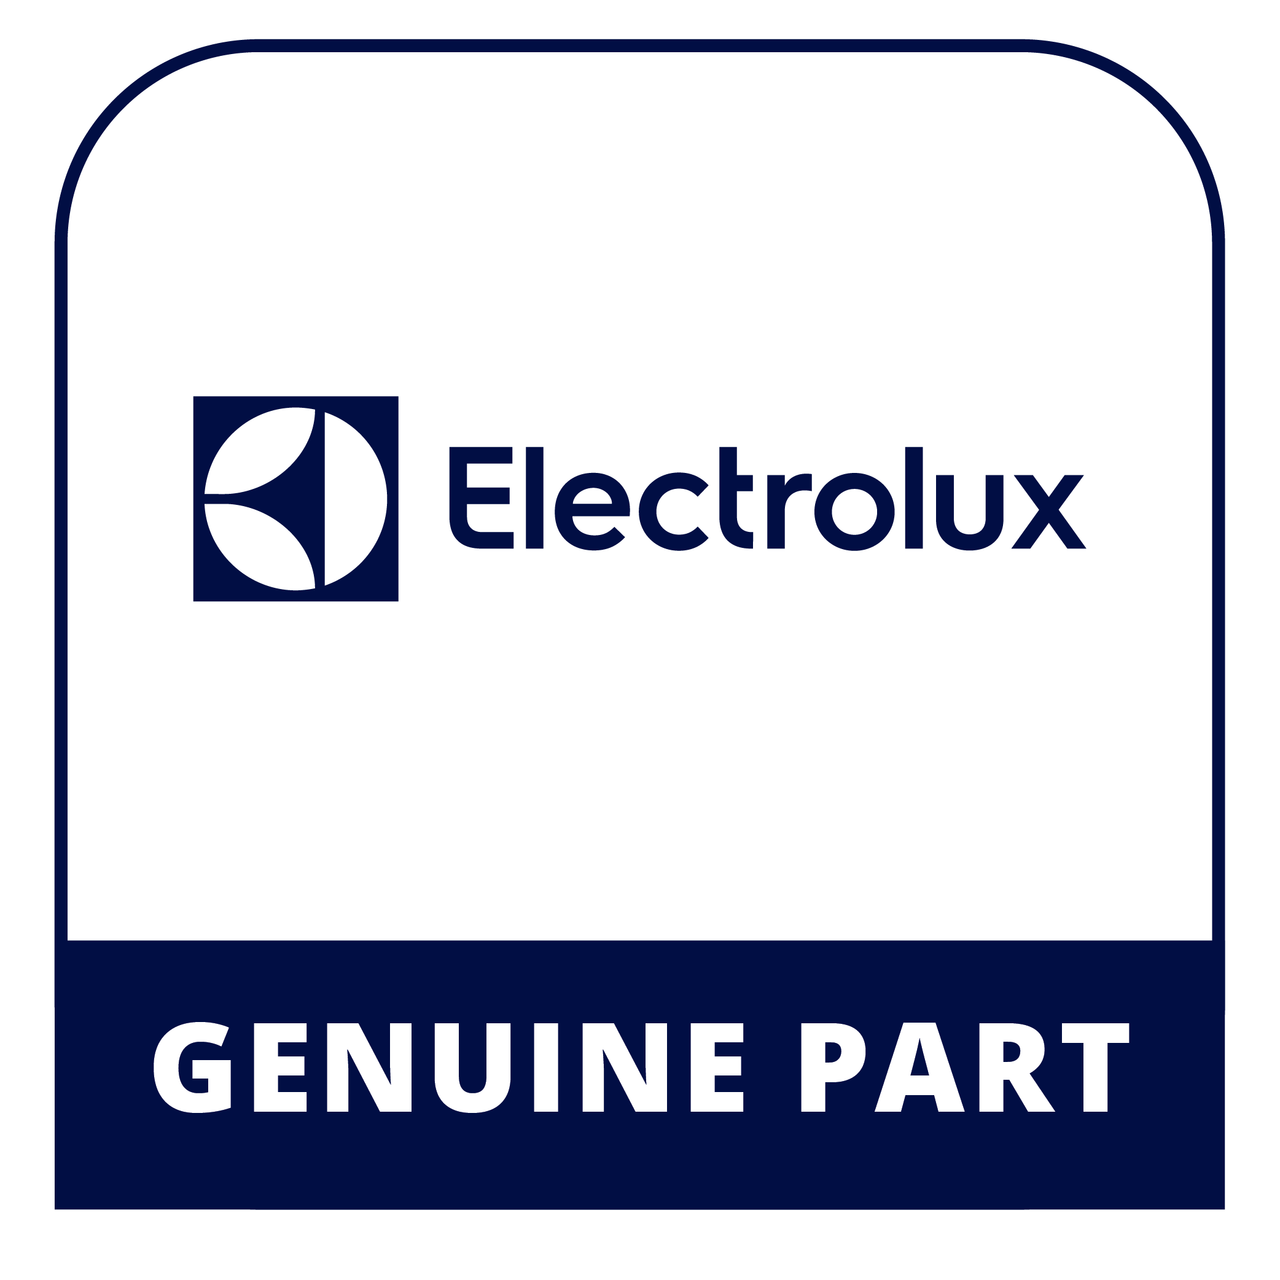 Frigidaire - Electrolux 316123303 - Knob - Genuine Electrolux Part